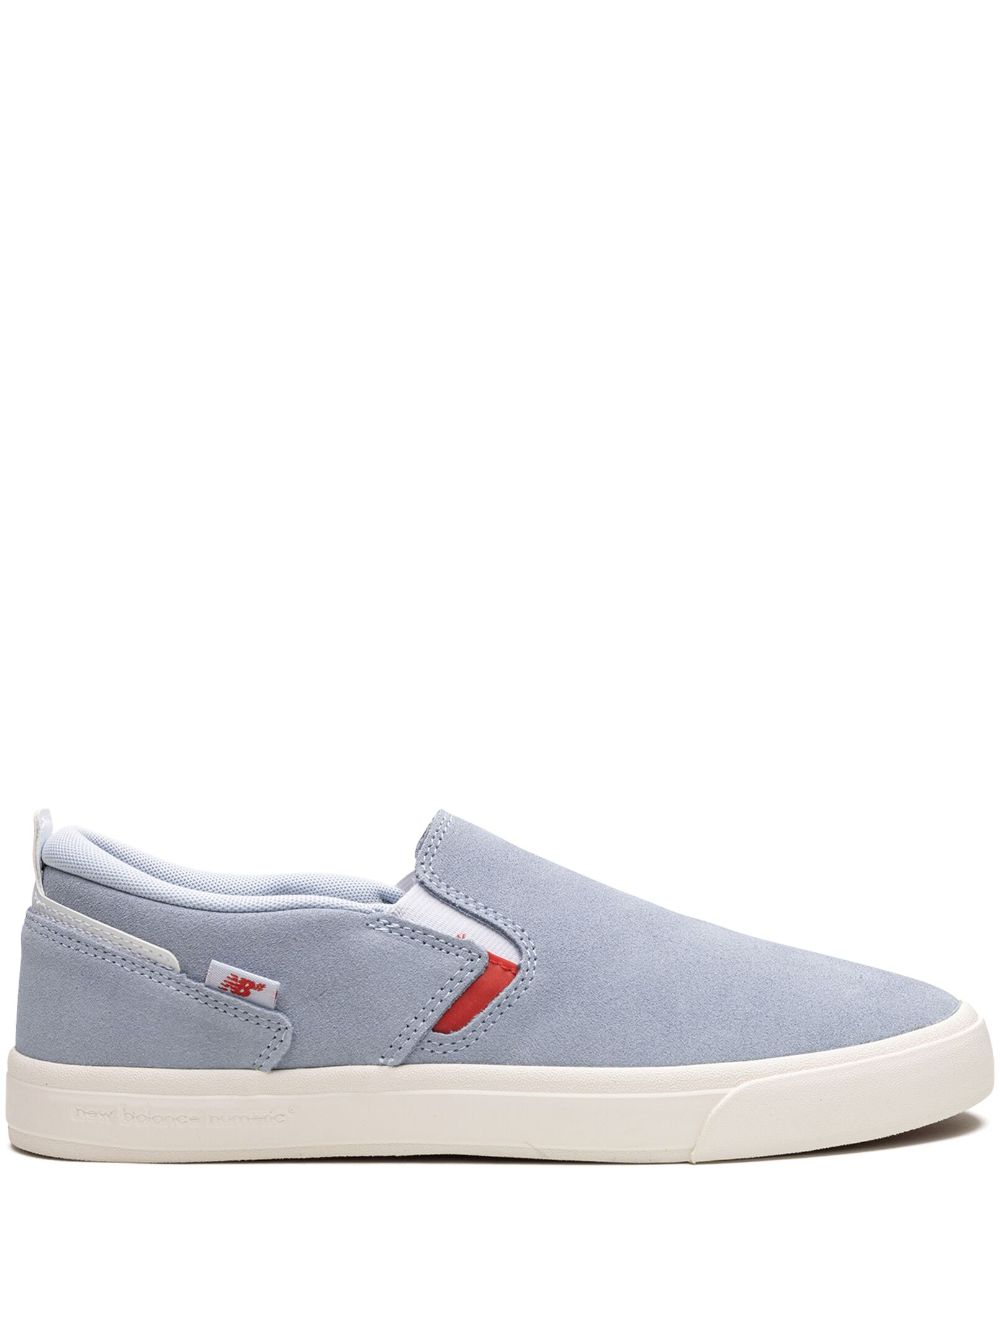 New Balance Numeric Jamie Foy 306 ''Grey'' sneakers - Blue